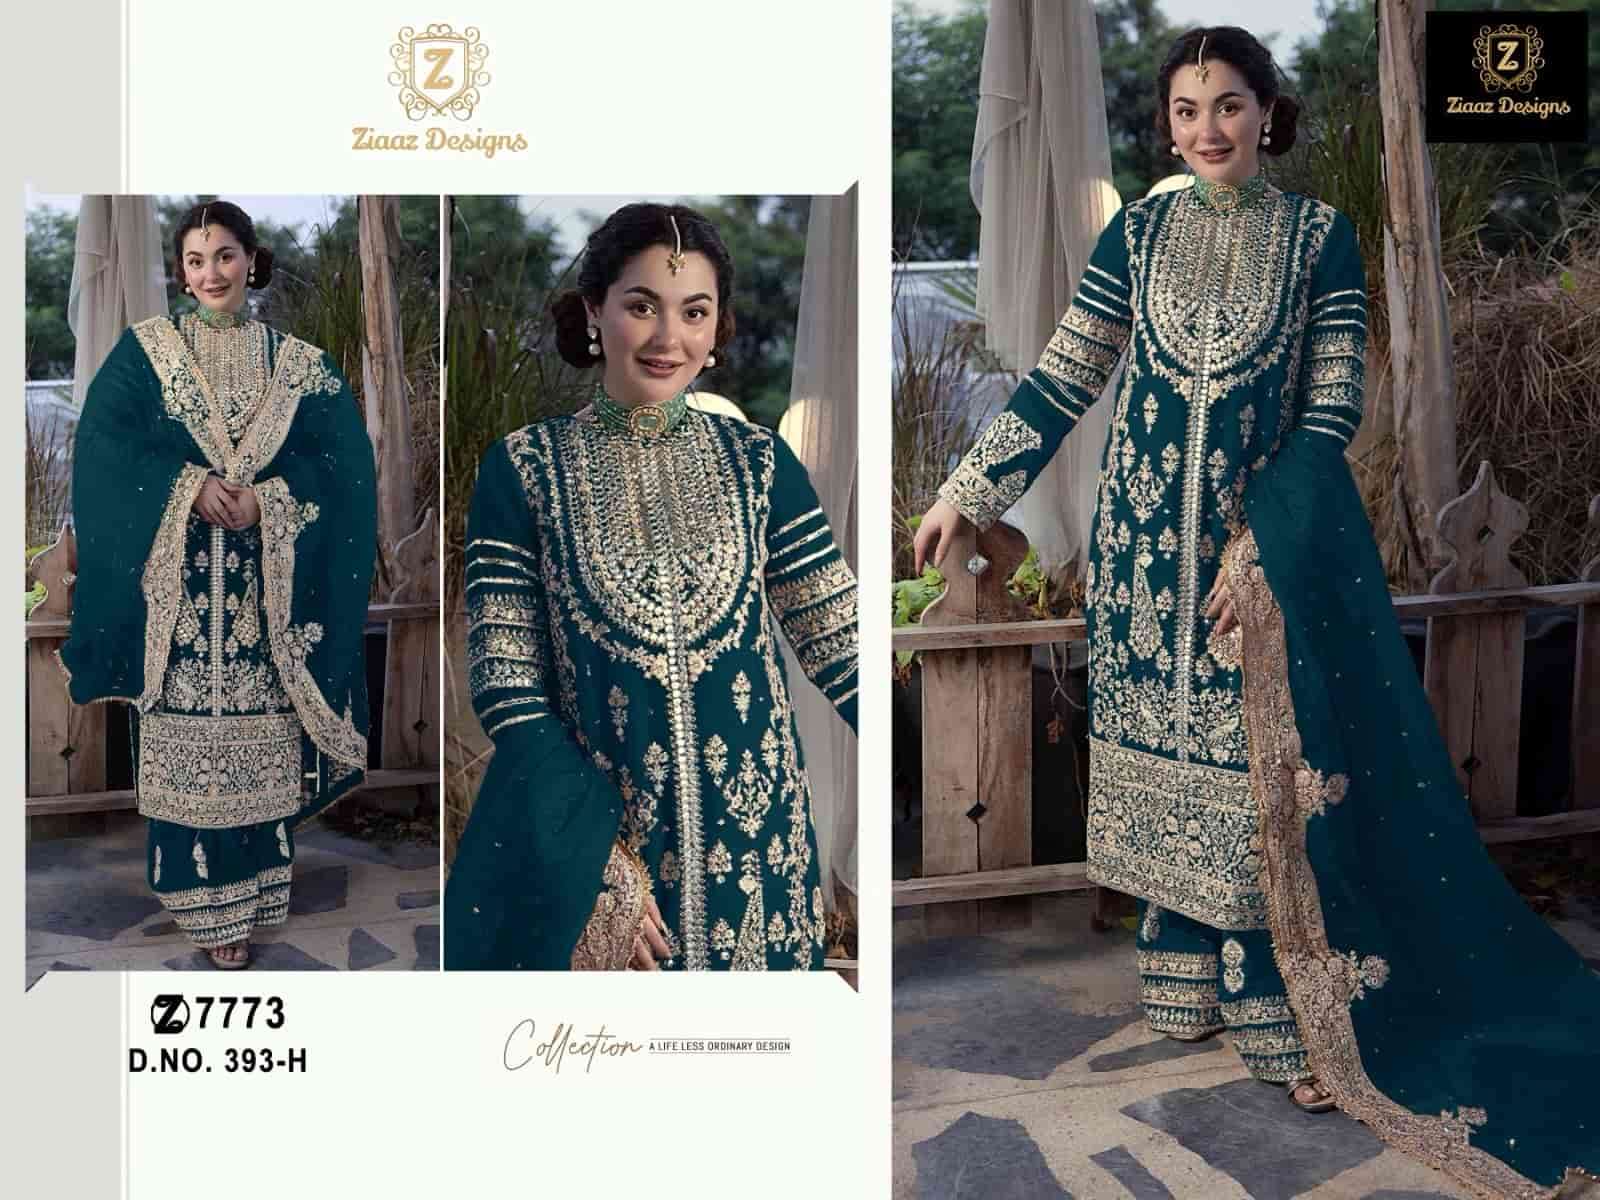 Ziaaz Designs 393 H Exclusive Heavy Designer Party Wear Style Salwar Kameez Collection